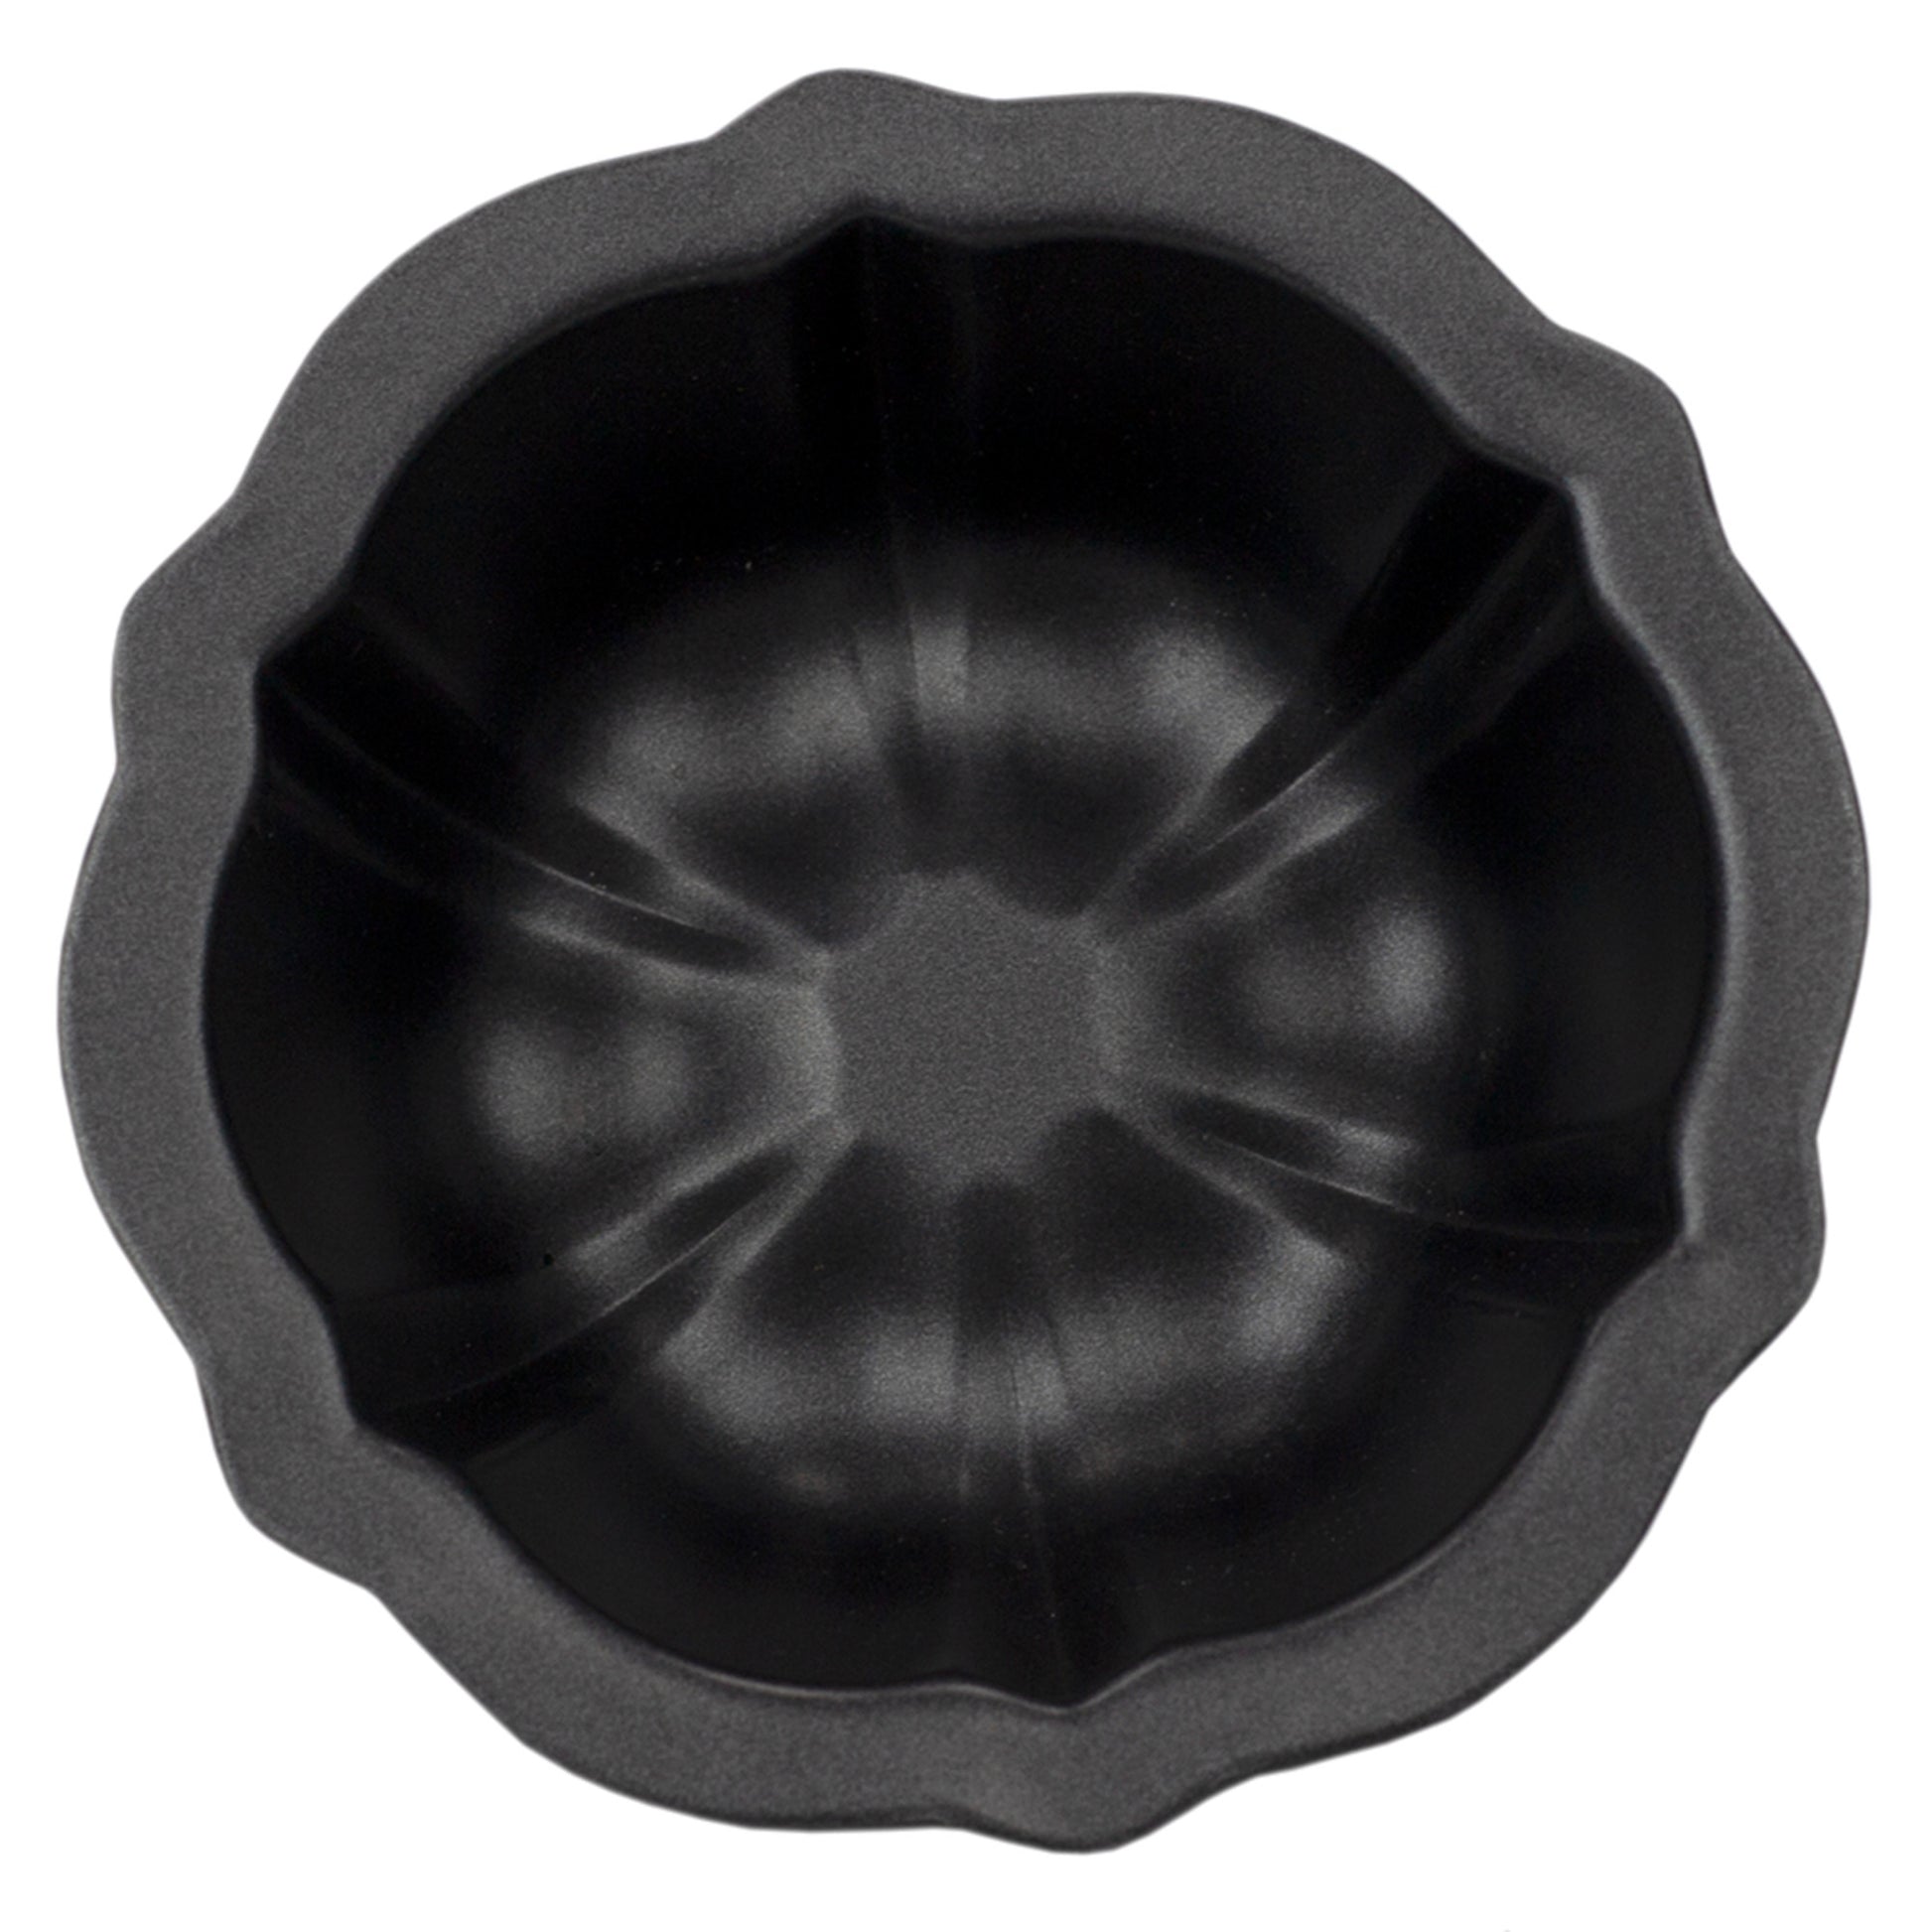 Home Basics Non-Stick Quick Release Steel Mini Bakeware Pan, Flower - Black